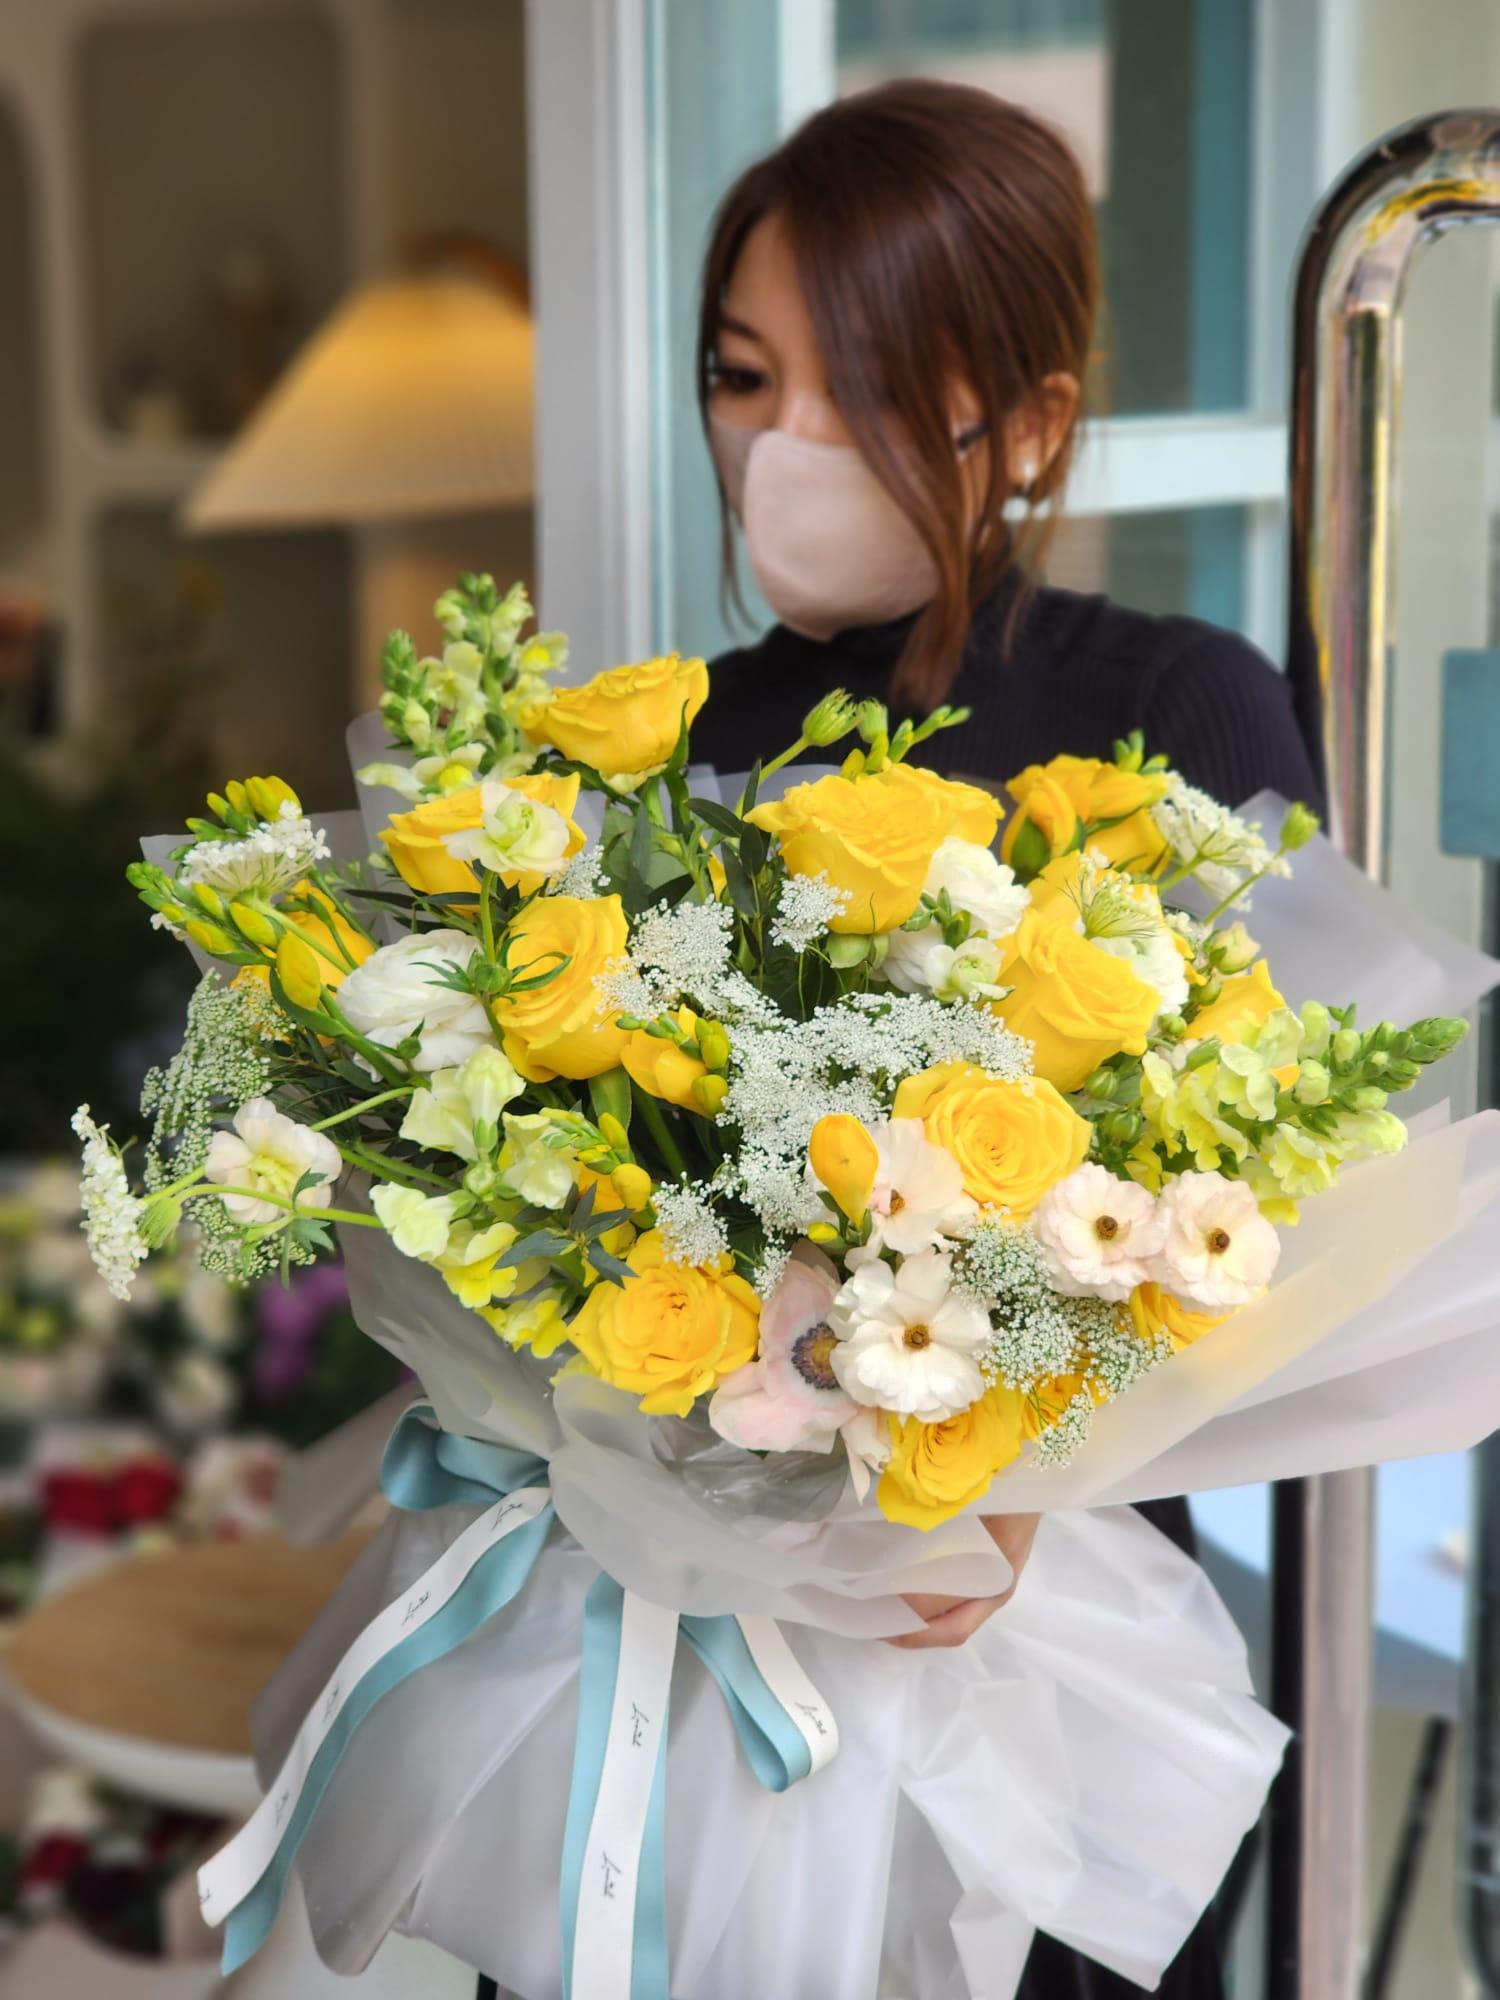 Valencia - Yellow Rose Bouquet - Lavish Florist